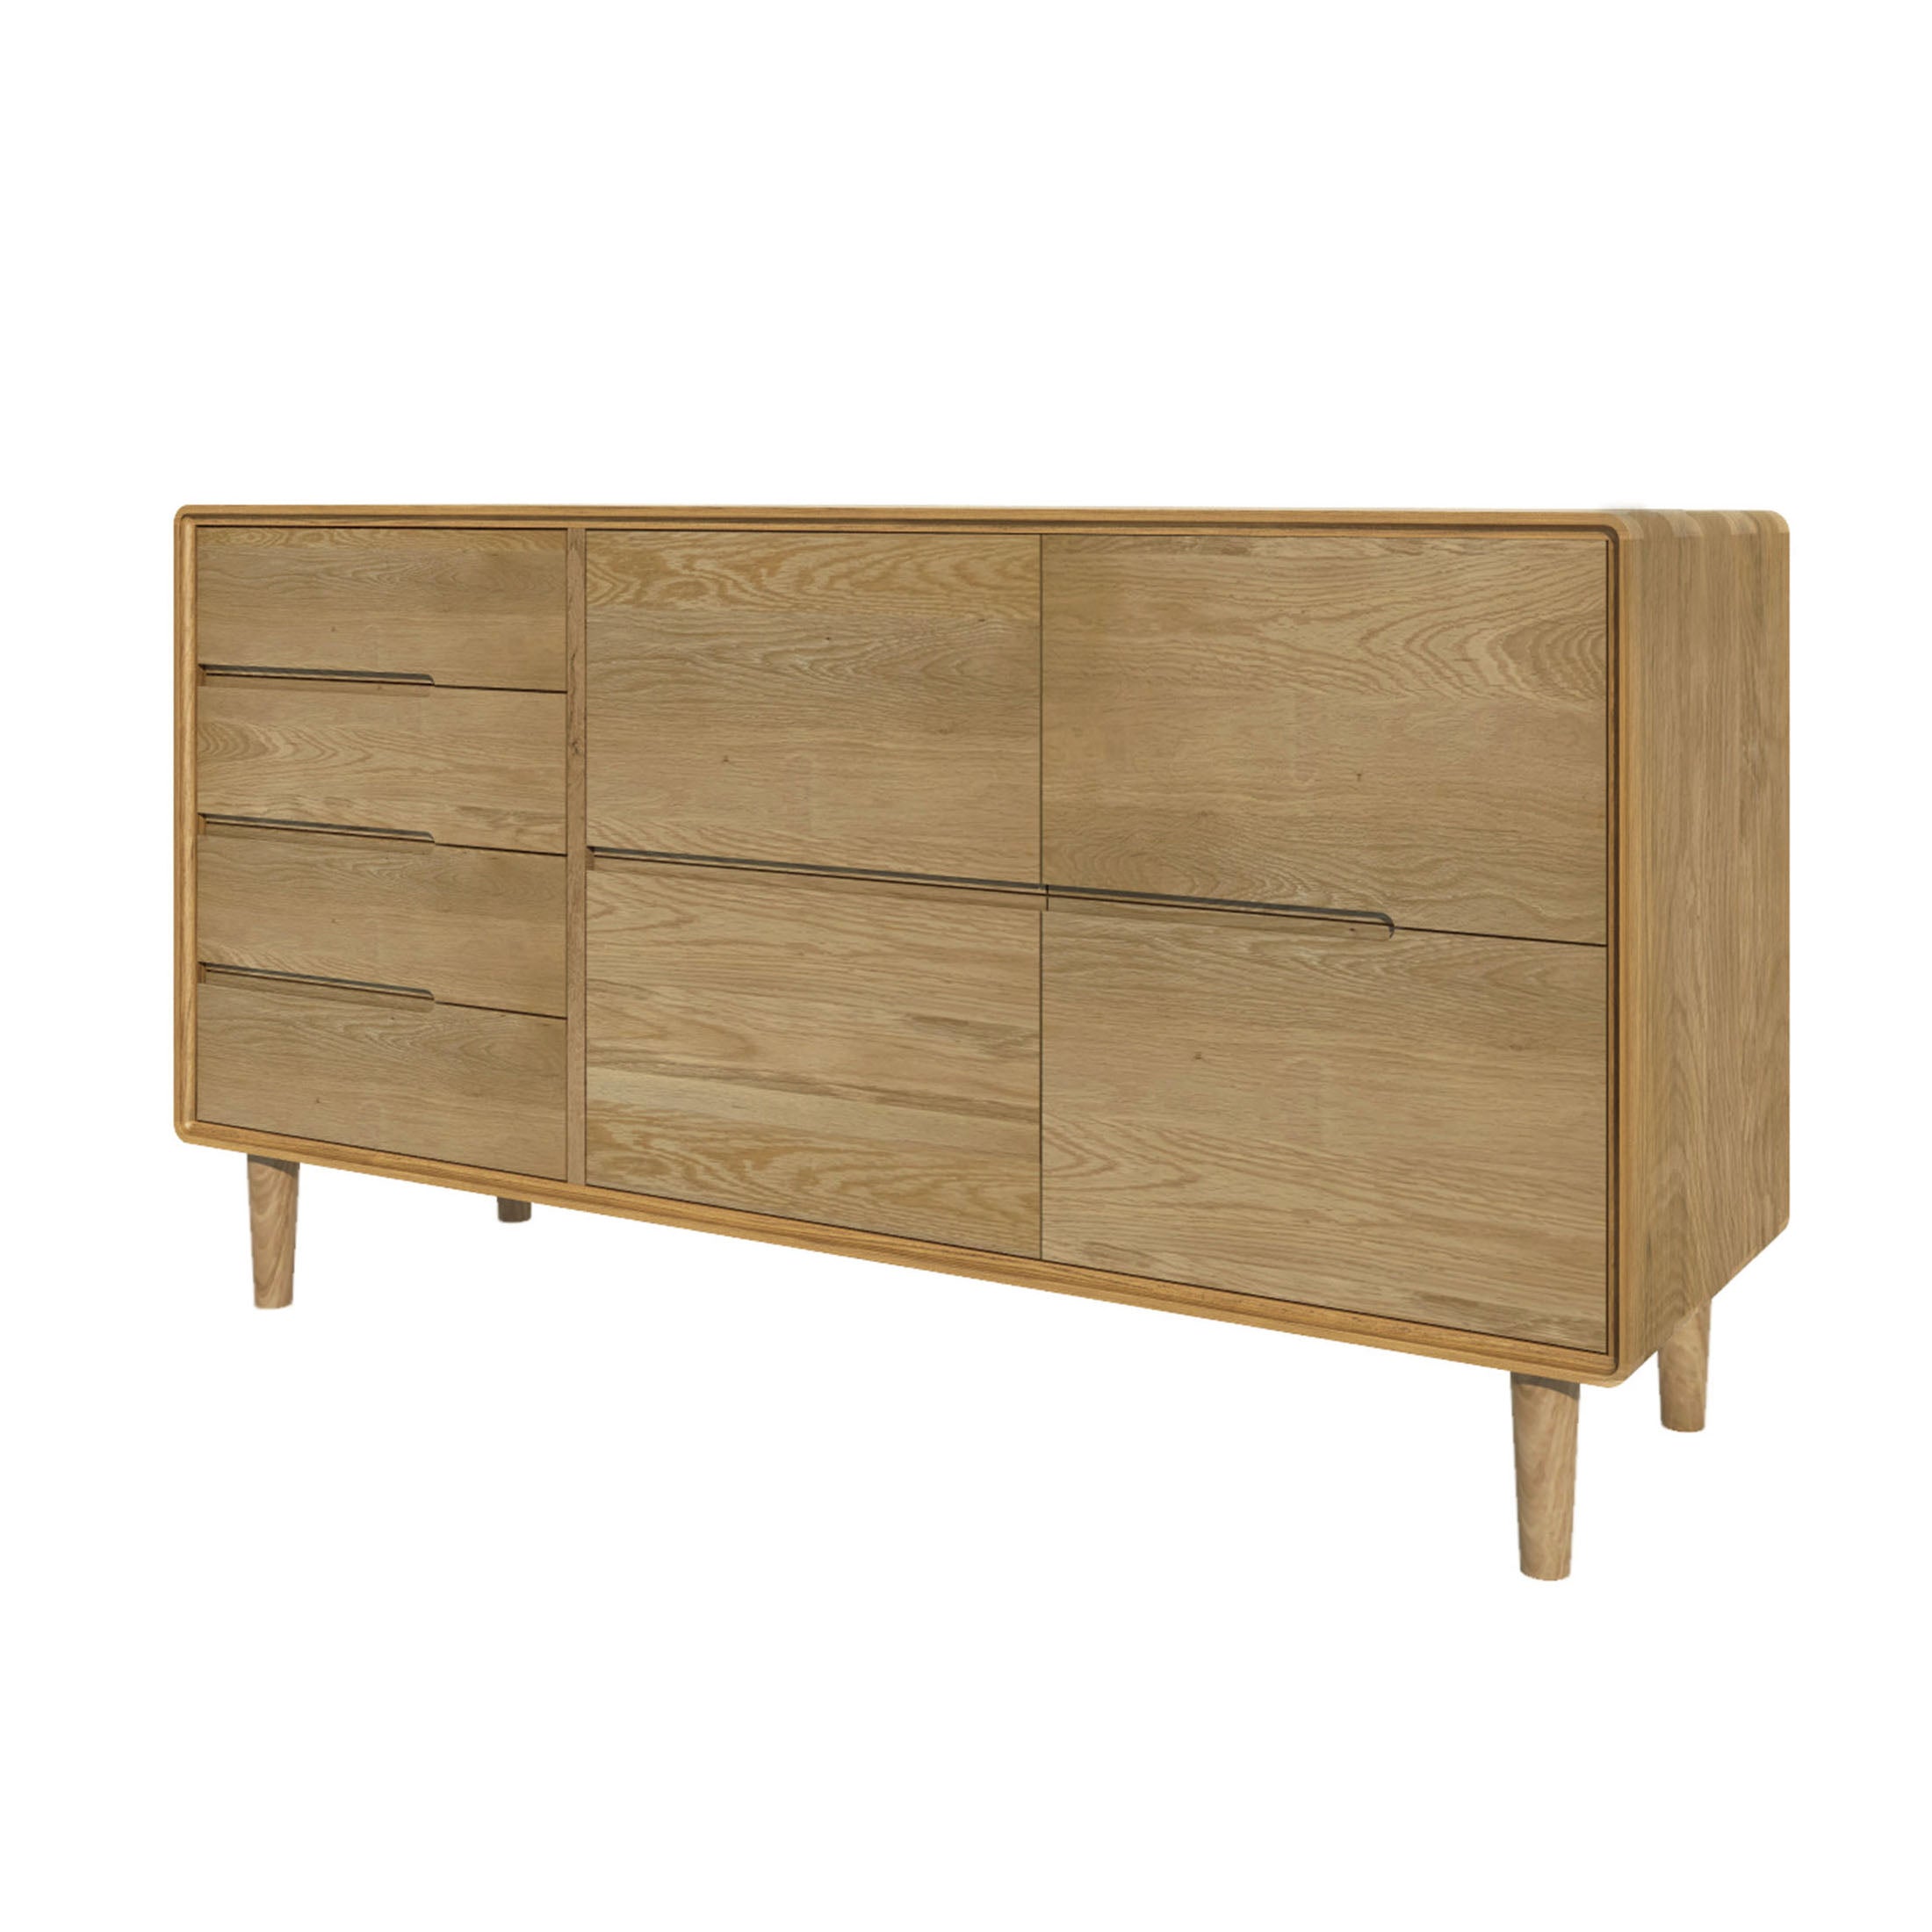 Nordic Scandic Oak large sideboard Furniture from Top Secret Furniture